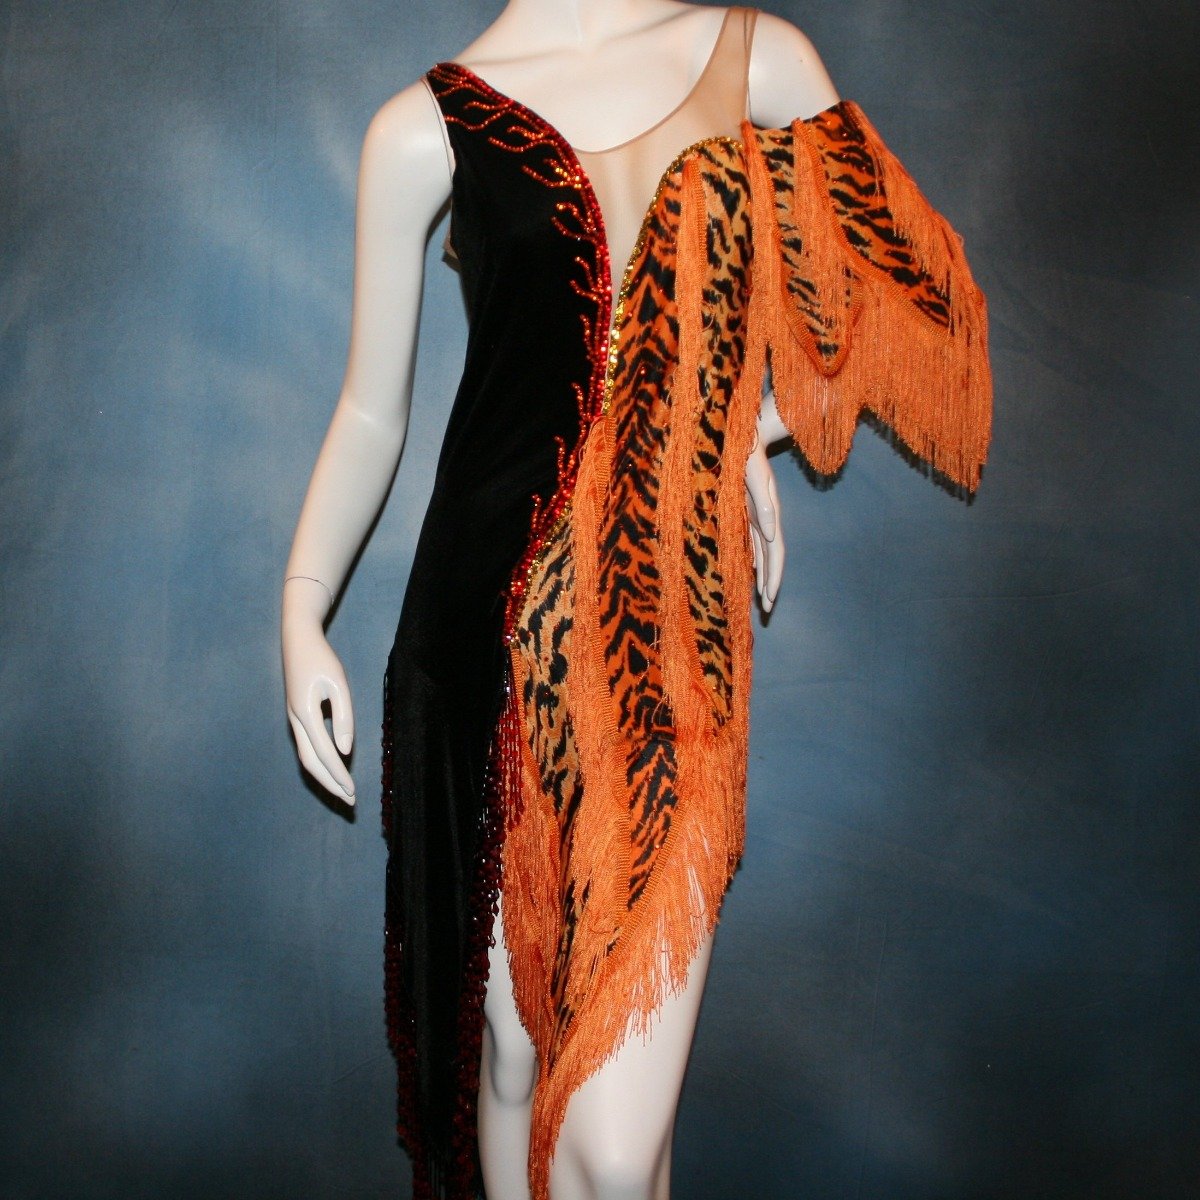 Crystal's Creations close up view of orange & black tiger print Latin/rhythm dress with fringe